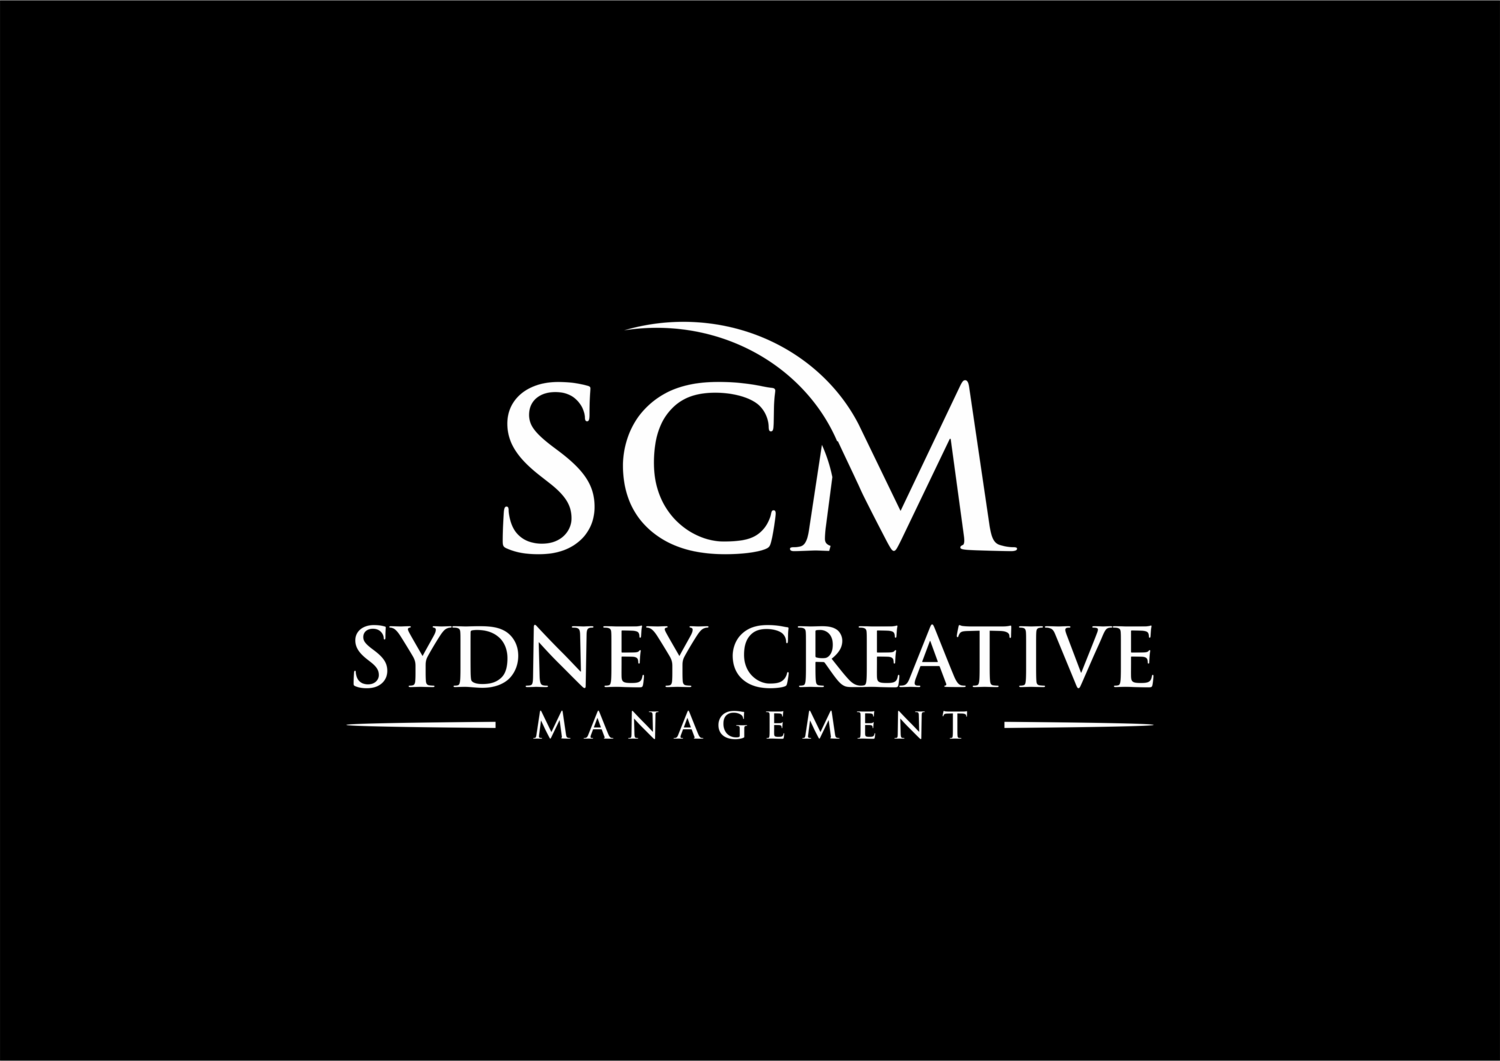 Sydney Creative Management